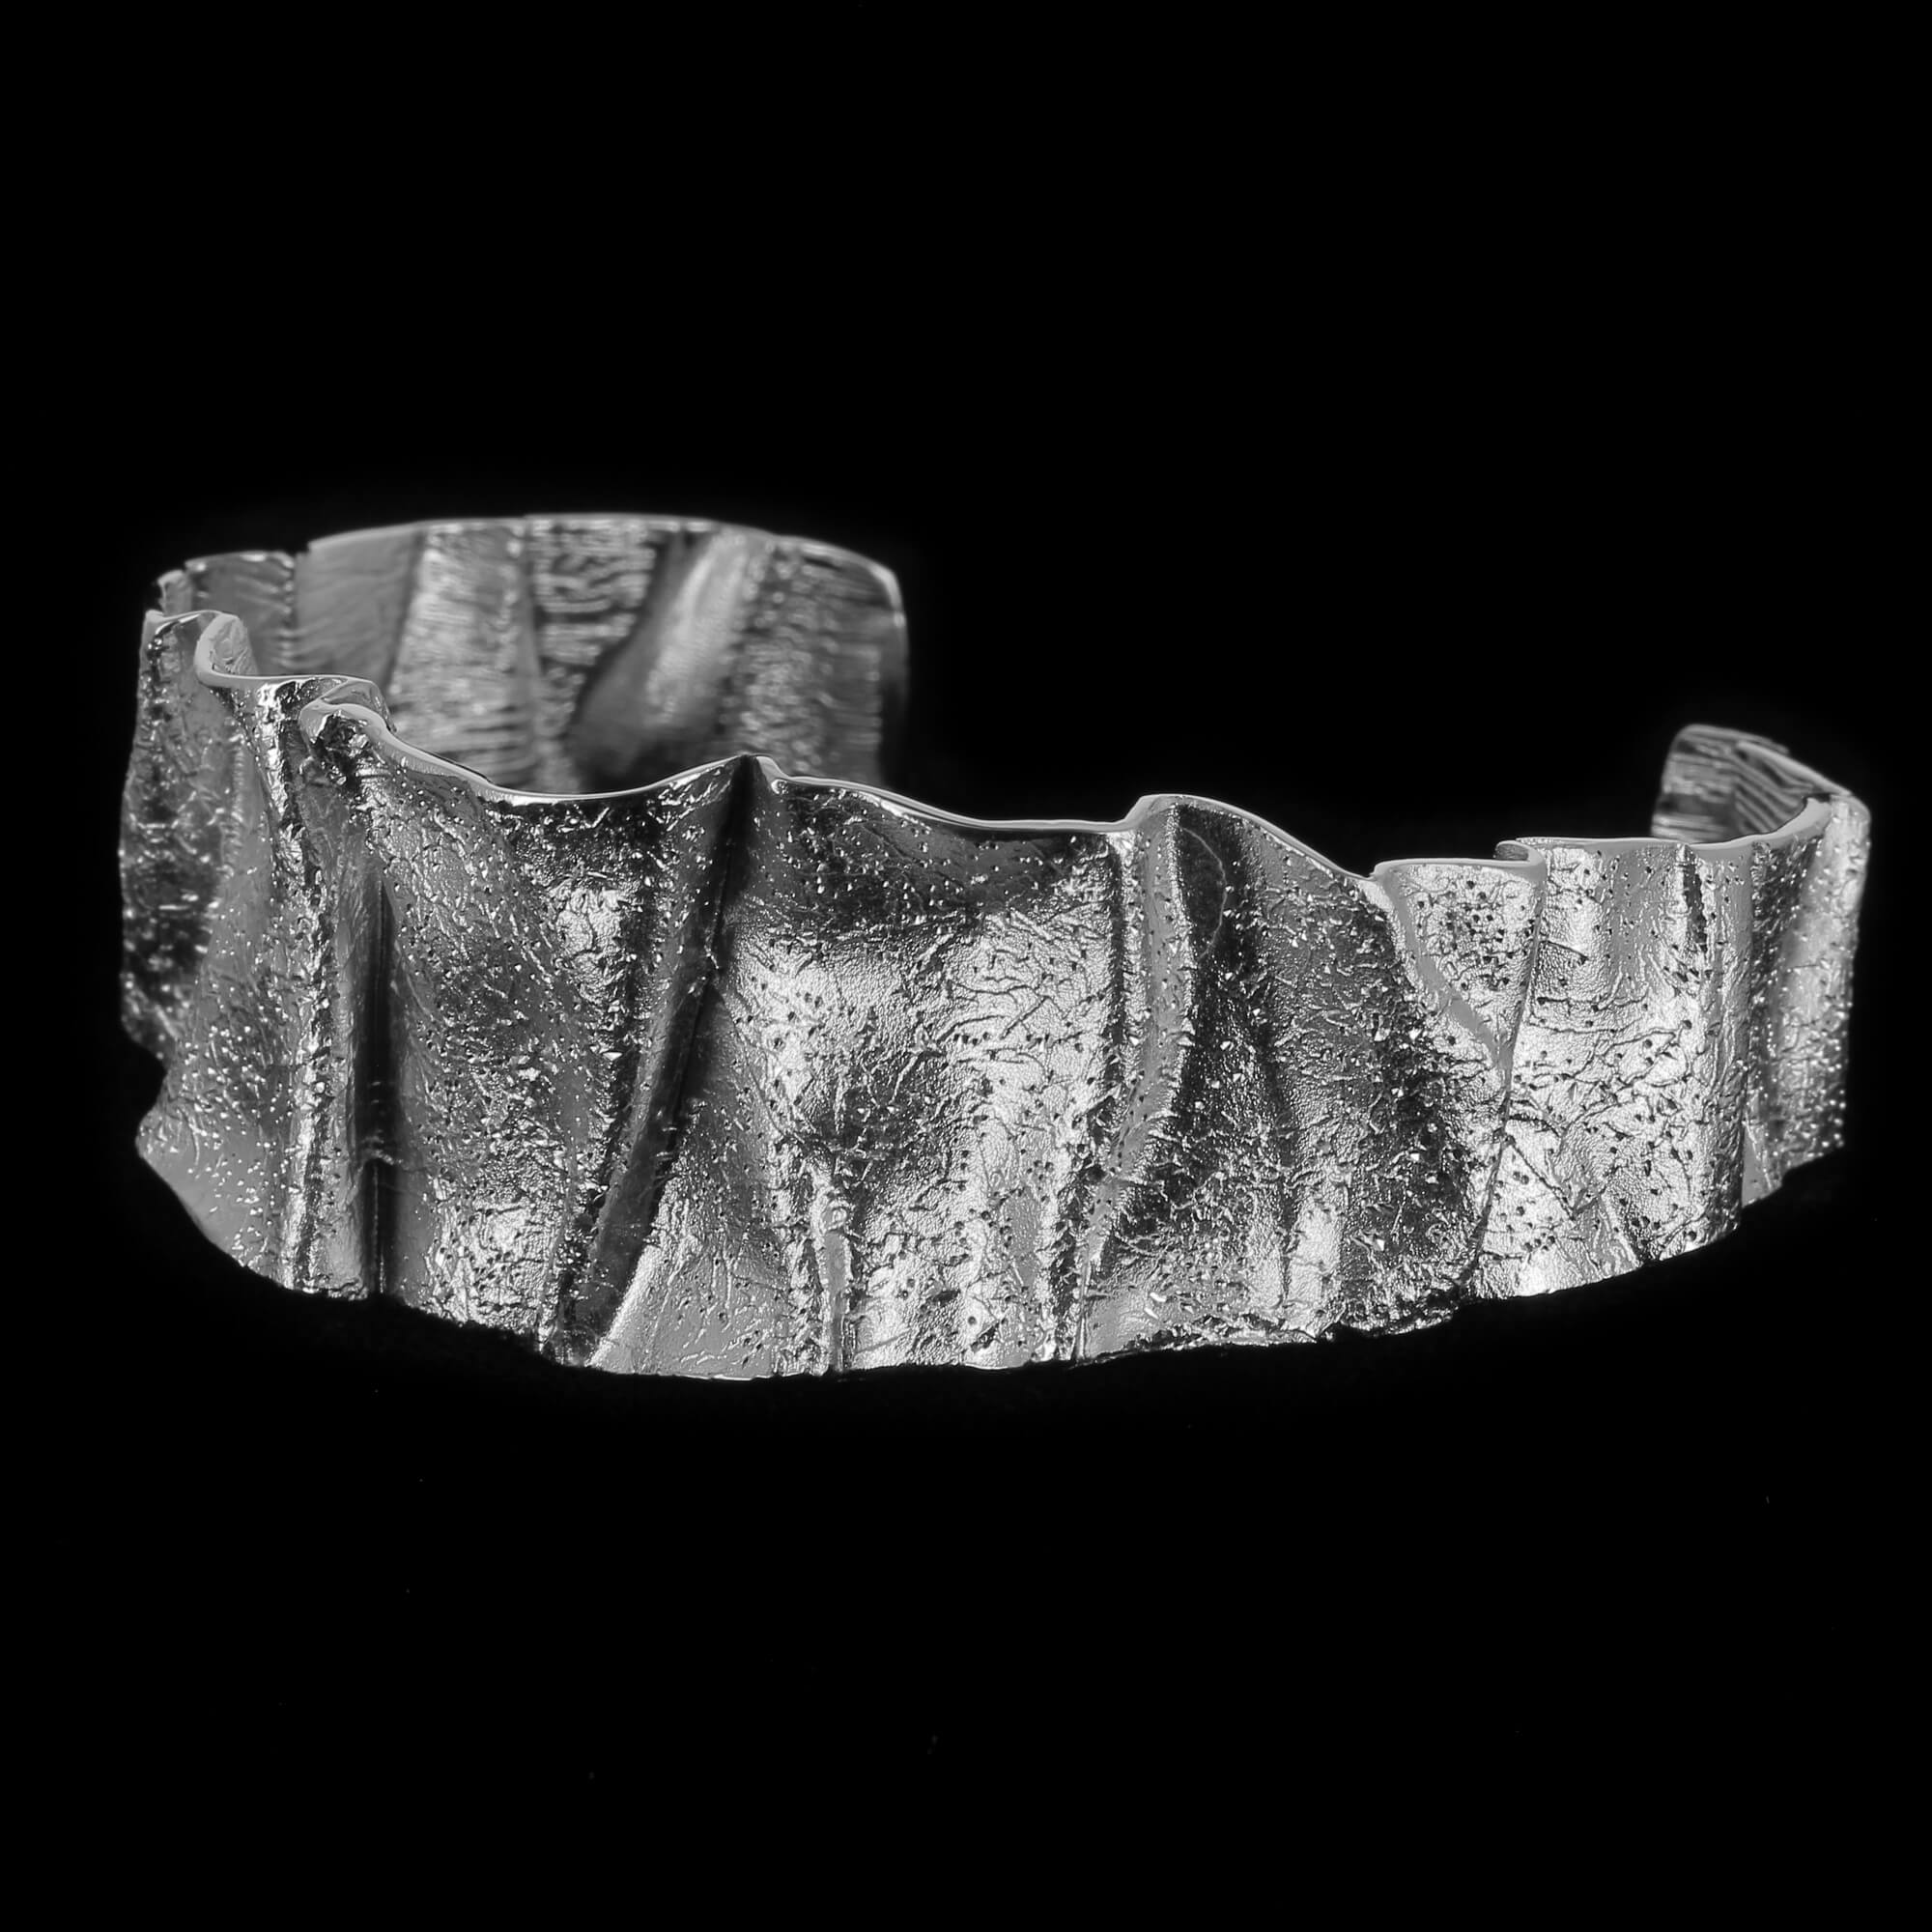 Smaller matt folded bracelet in dark grey plated silver